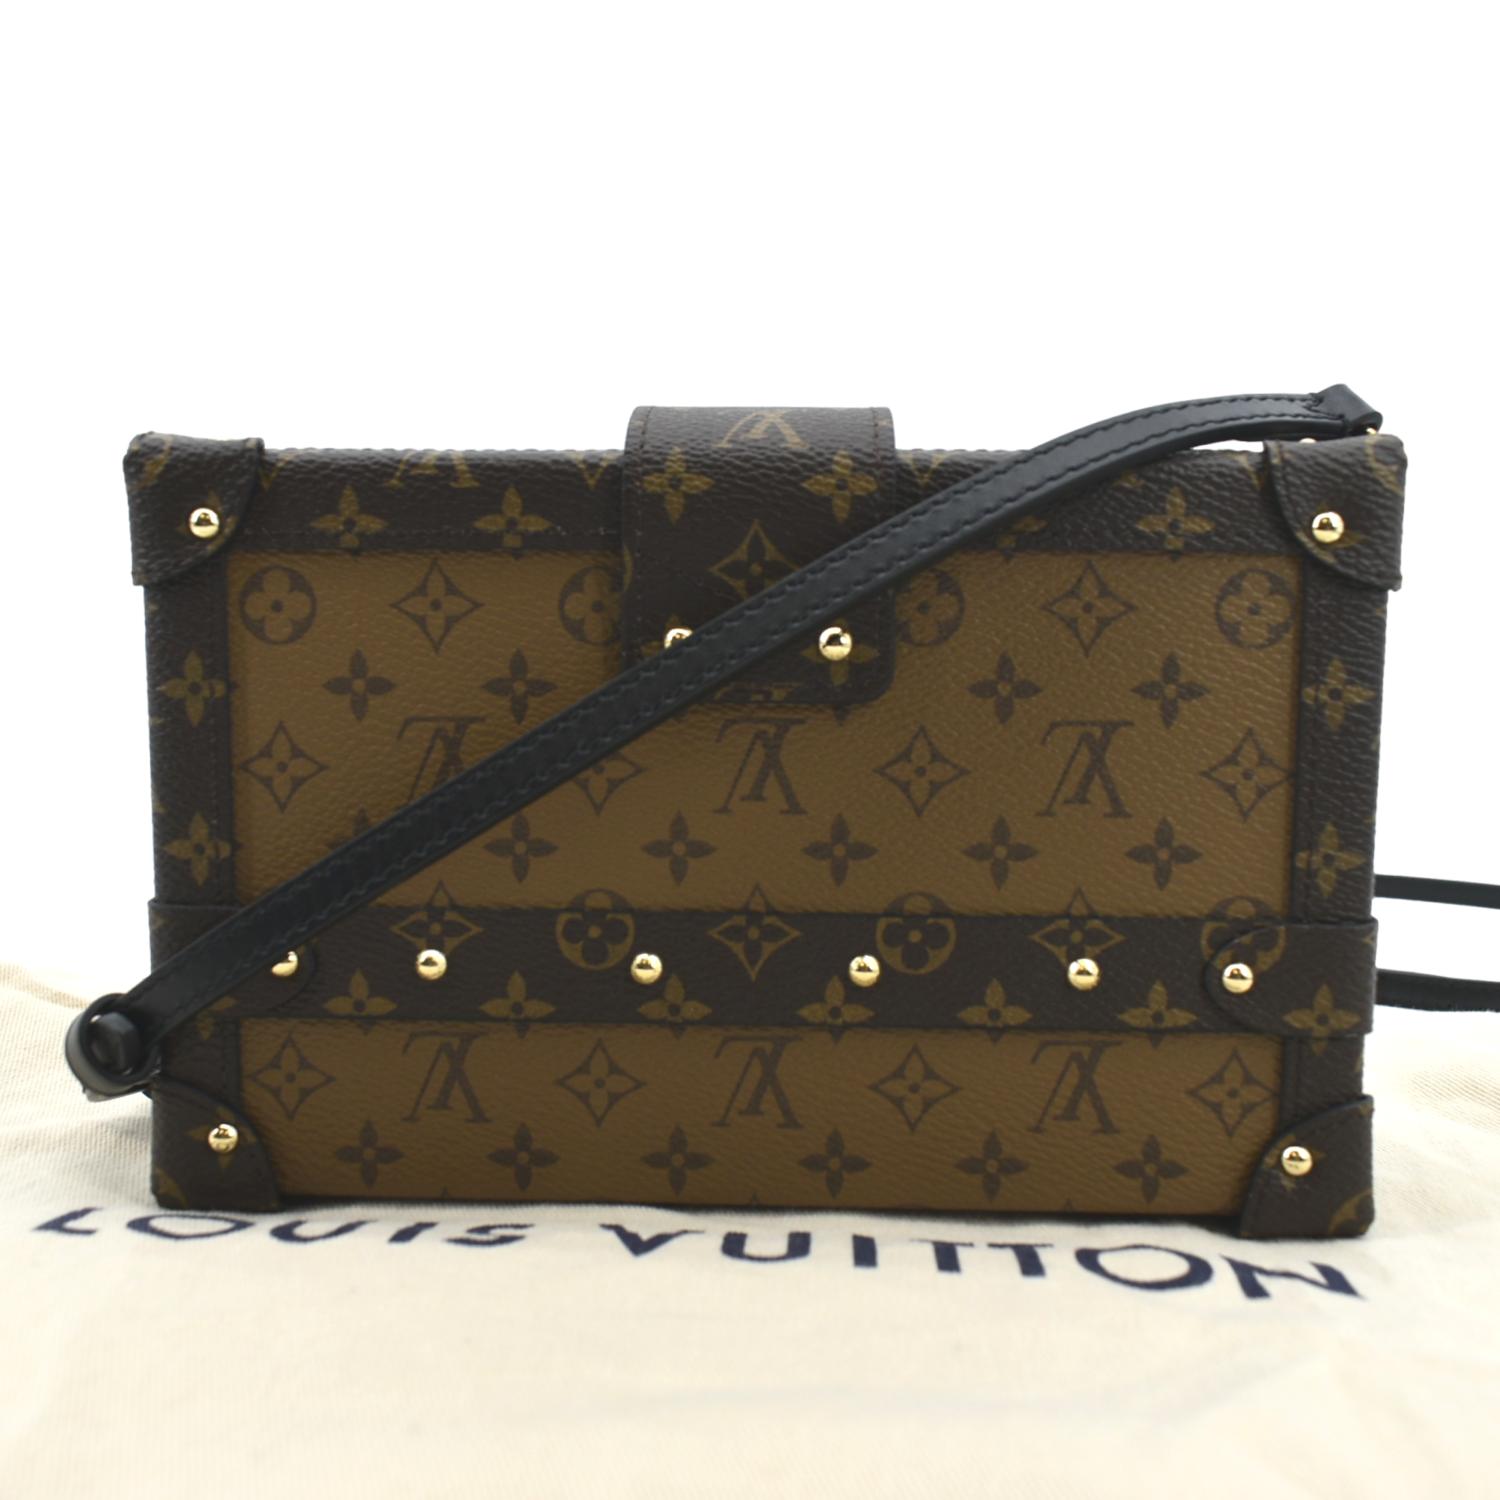 Louis Vuitton Petite Malle Graphic Print Leather Crossbody Bag Black/Multicolor